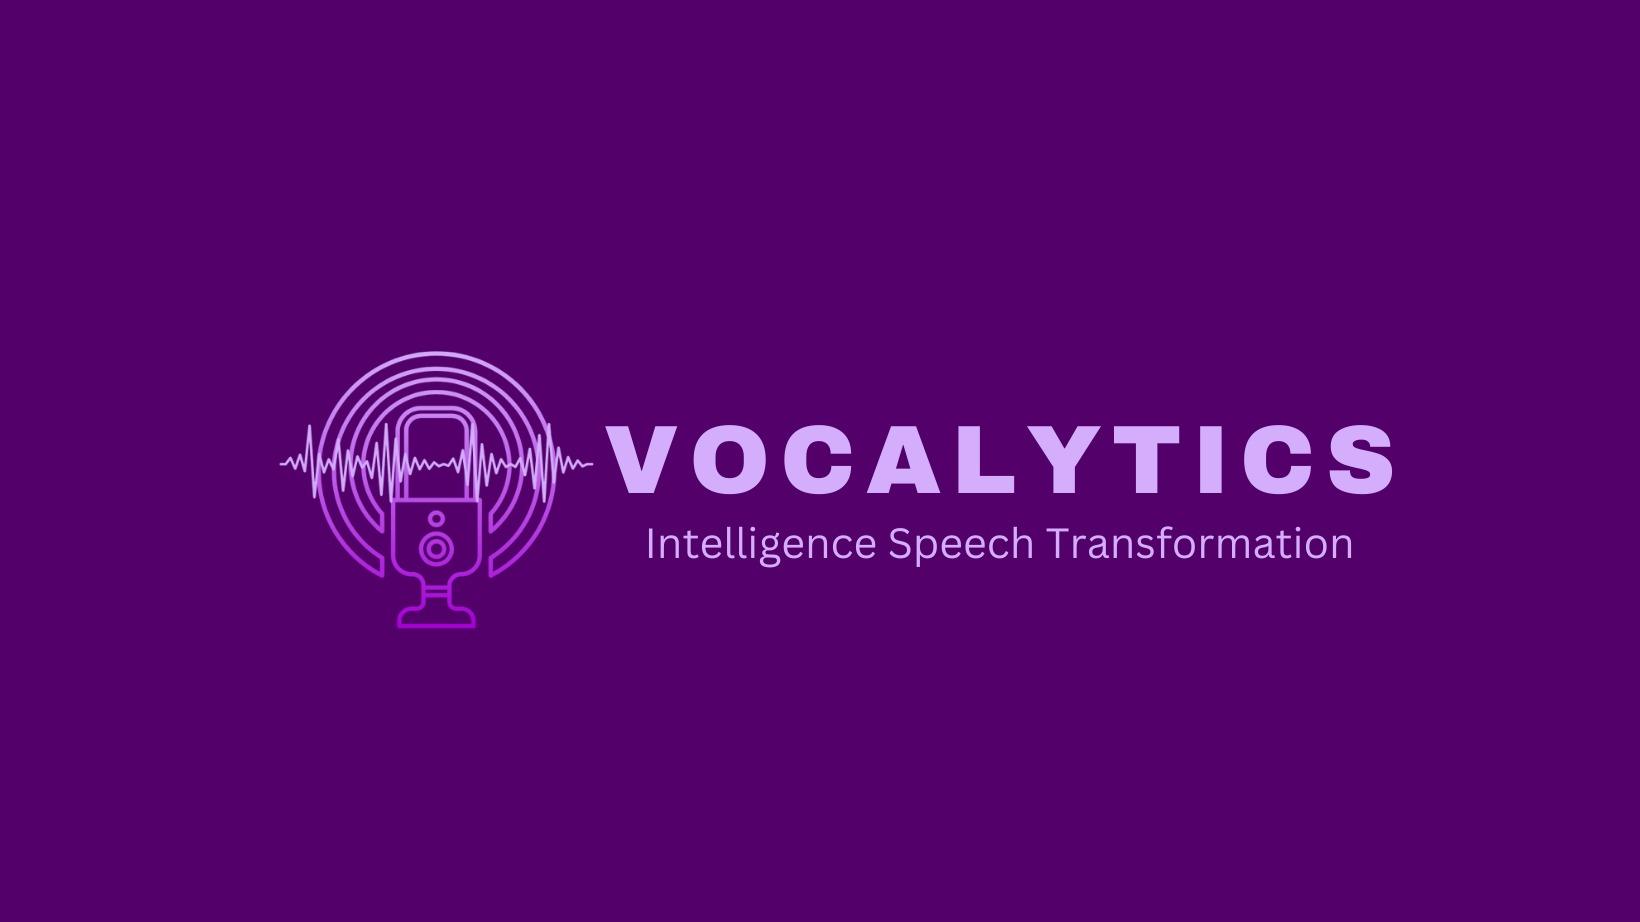 VOCALYTICS- Intelligence Speech Transformation